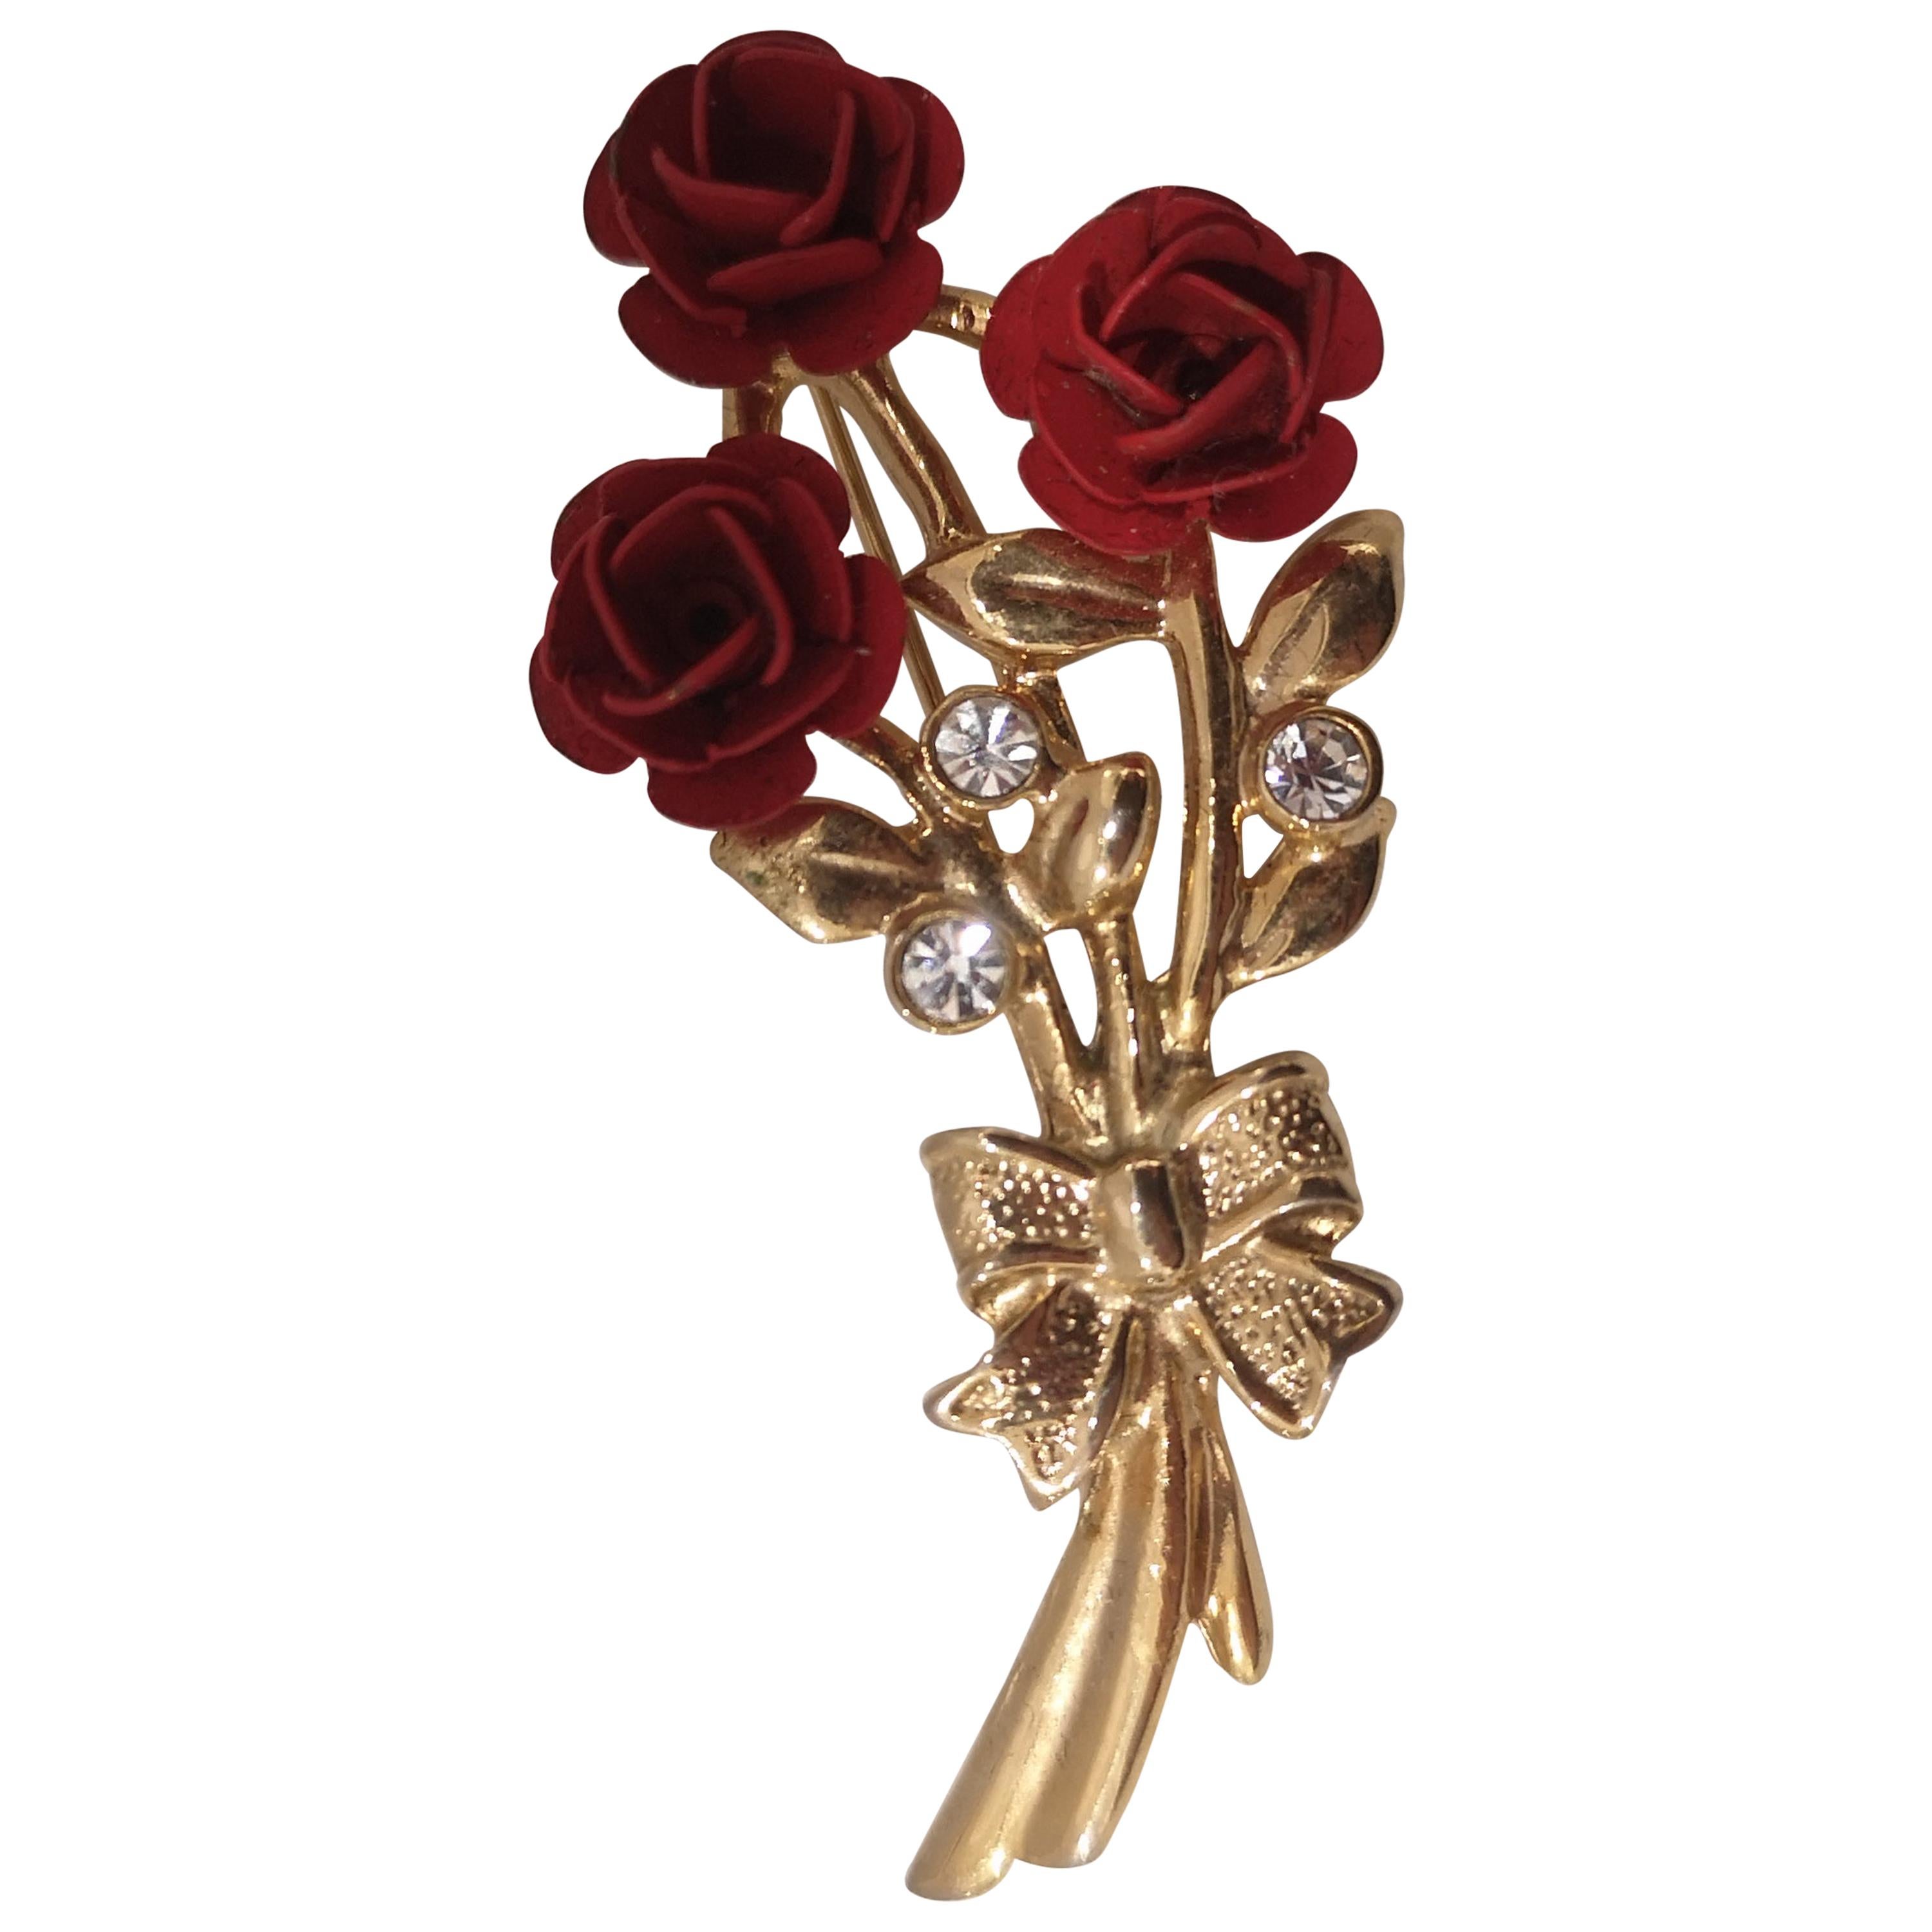 Vintage gold tone red roses brooch